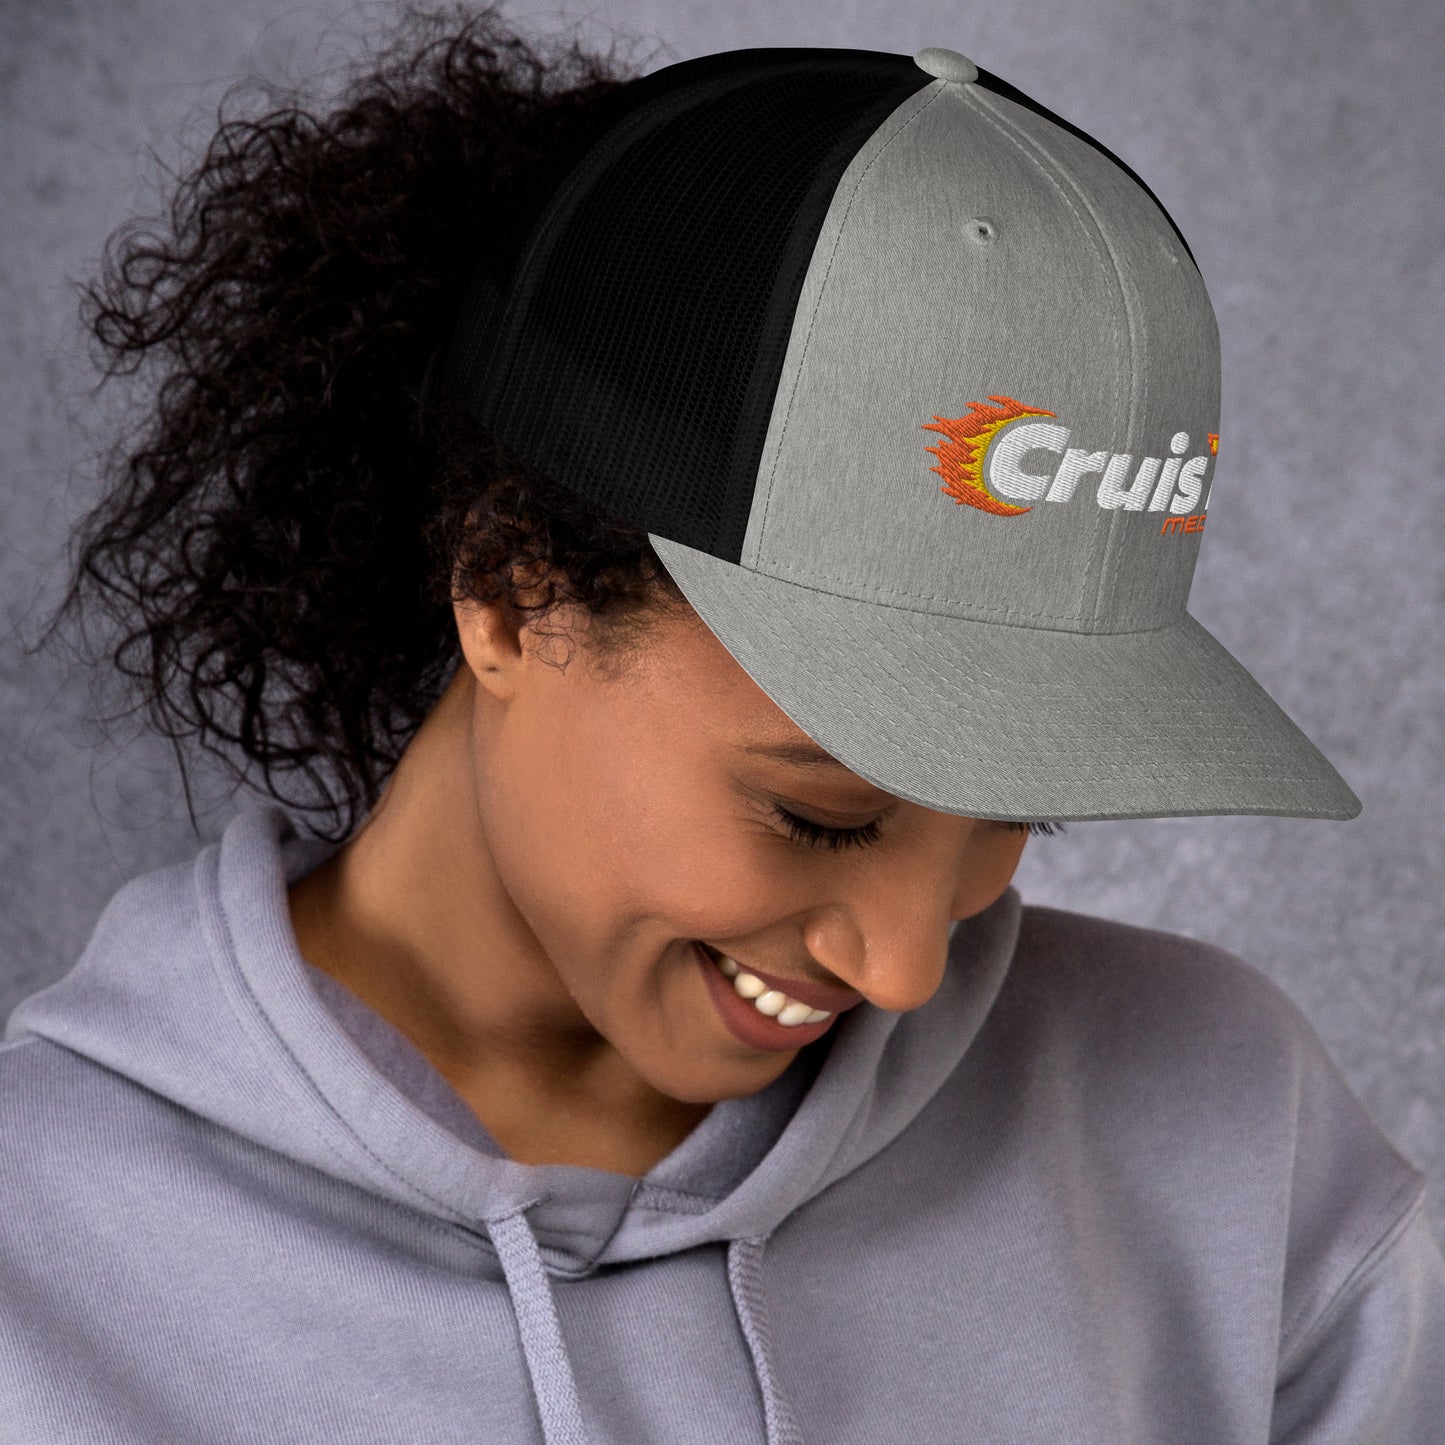 Cruis'n Media Trucker Hat